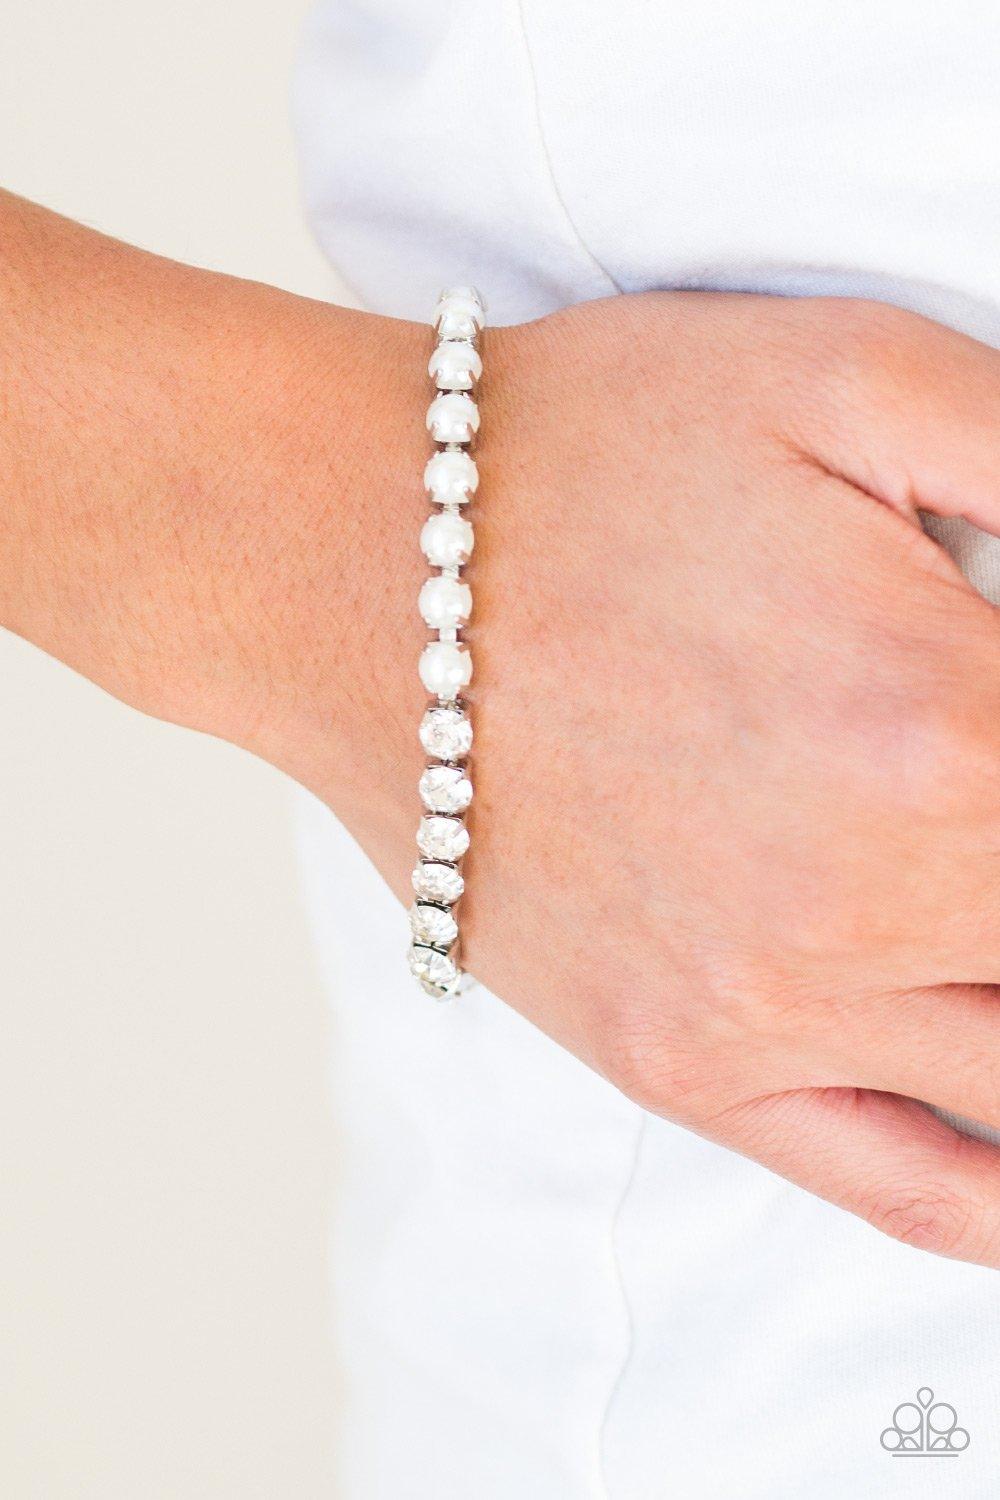 Out Like A SOCIALITE White Bracelet - Jewelry by Bretta